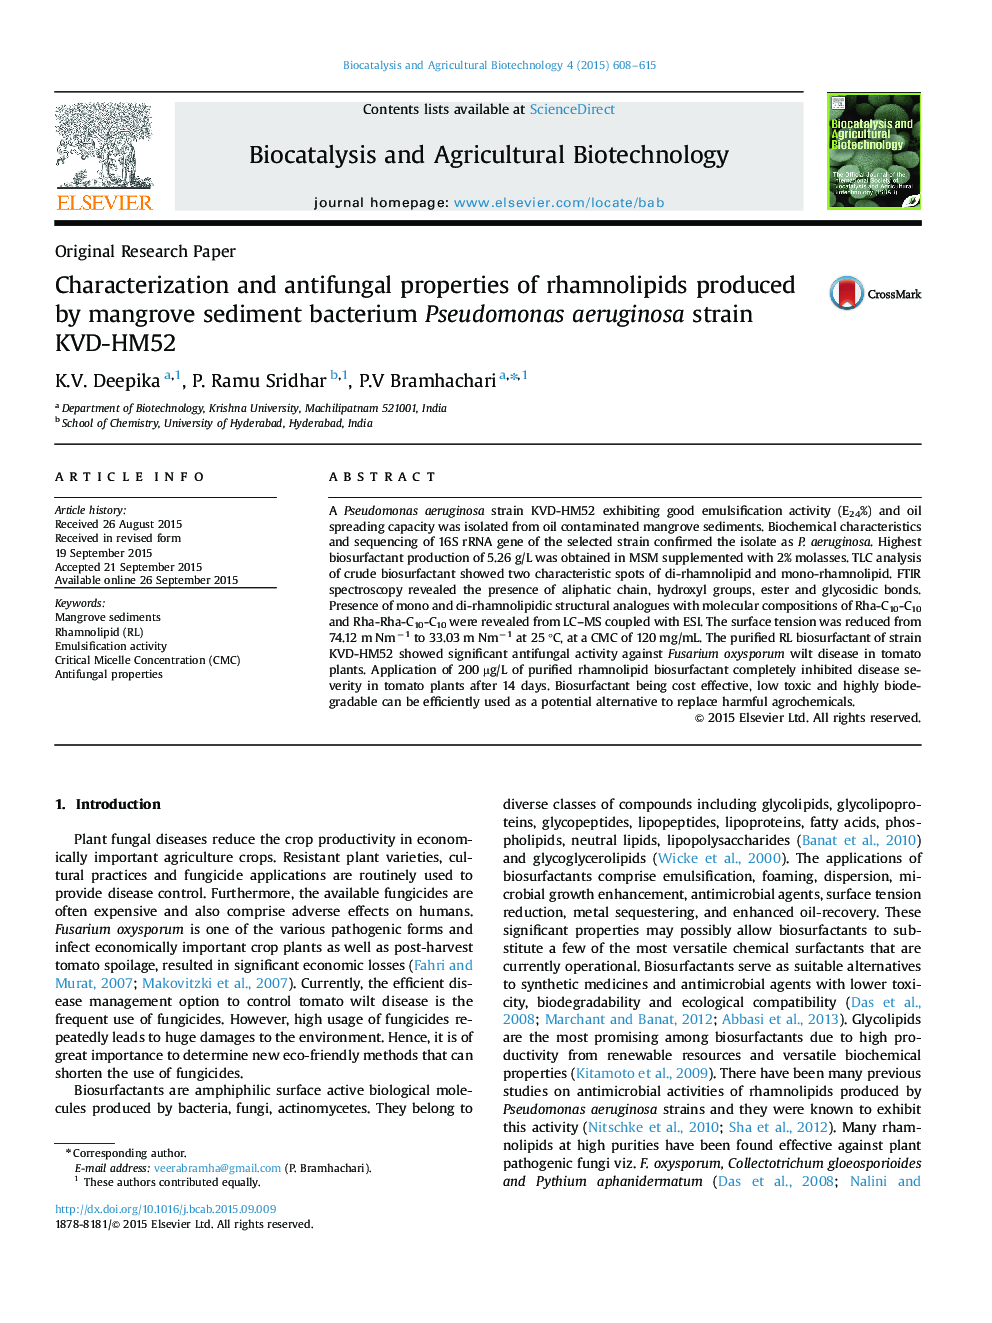 Characterization and antifungal properties of rhamnolipids produced by mangrove sediment bacterium Pseudomonas aeruginosa strain KVD-HM52